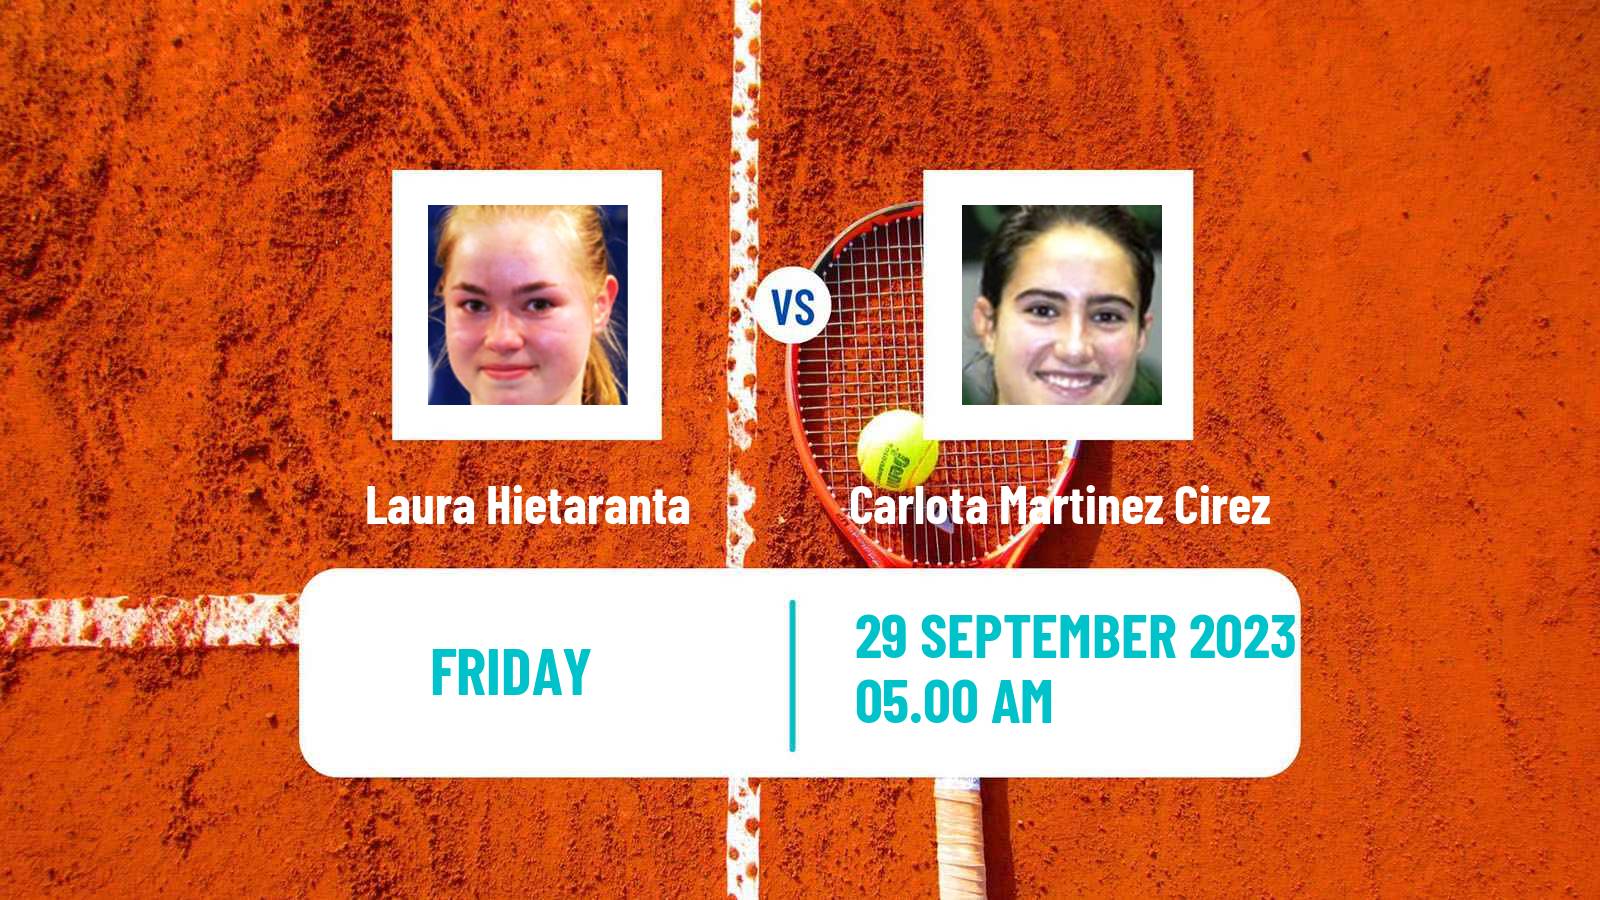 Tennis ITF W25 Santa Margherita Di Pula 12 Women Laura Hietaranta - Carlota Martinez Cirez